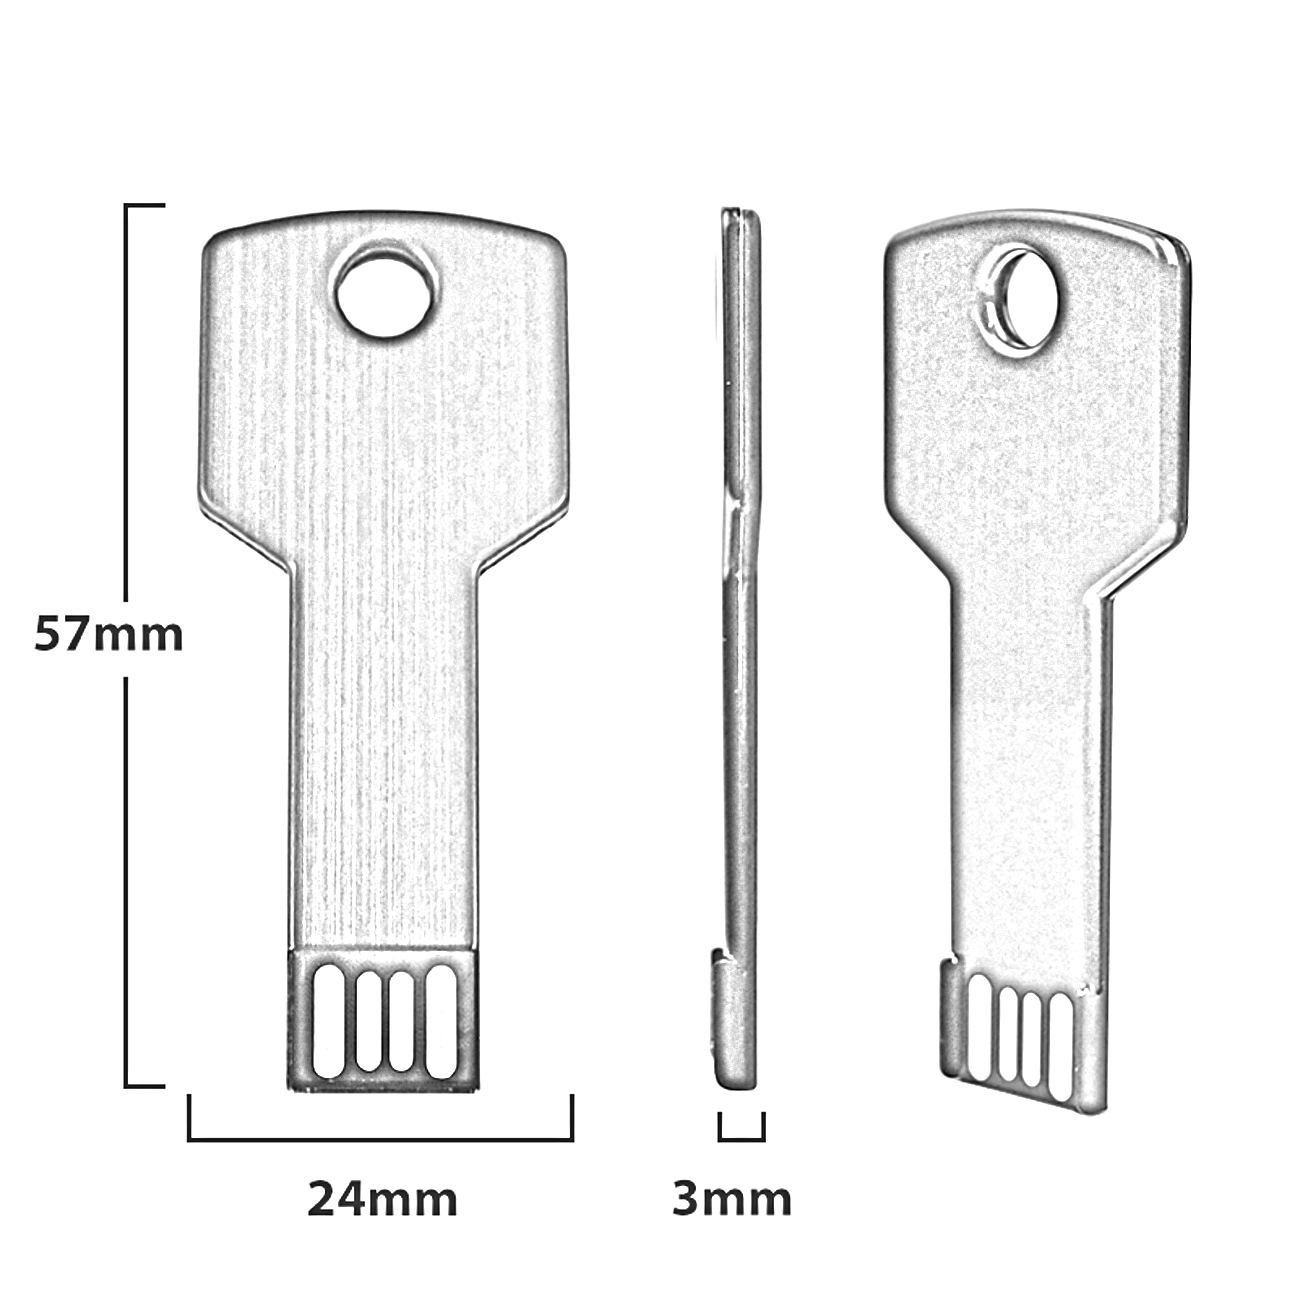 USB-Stick (Lila, USB GERMANY Lila 2GB Key 2 GB)